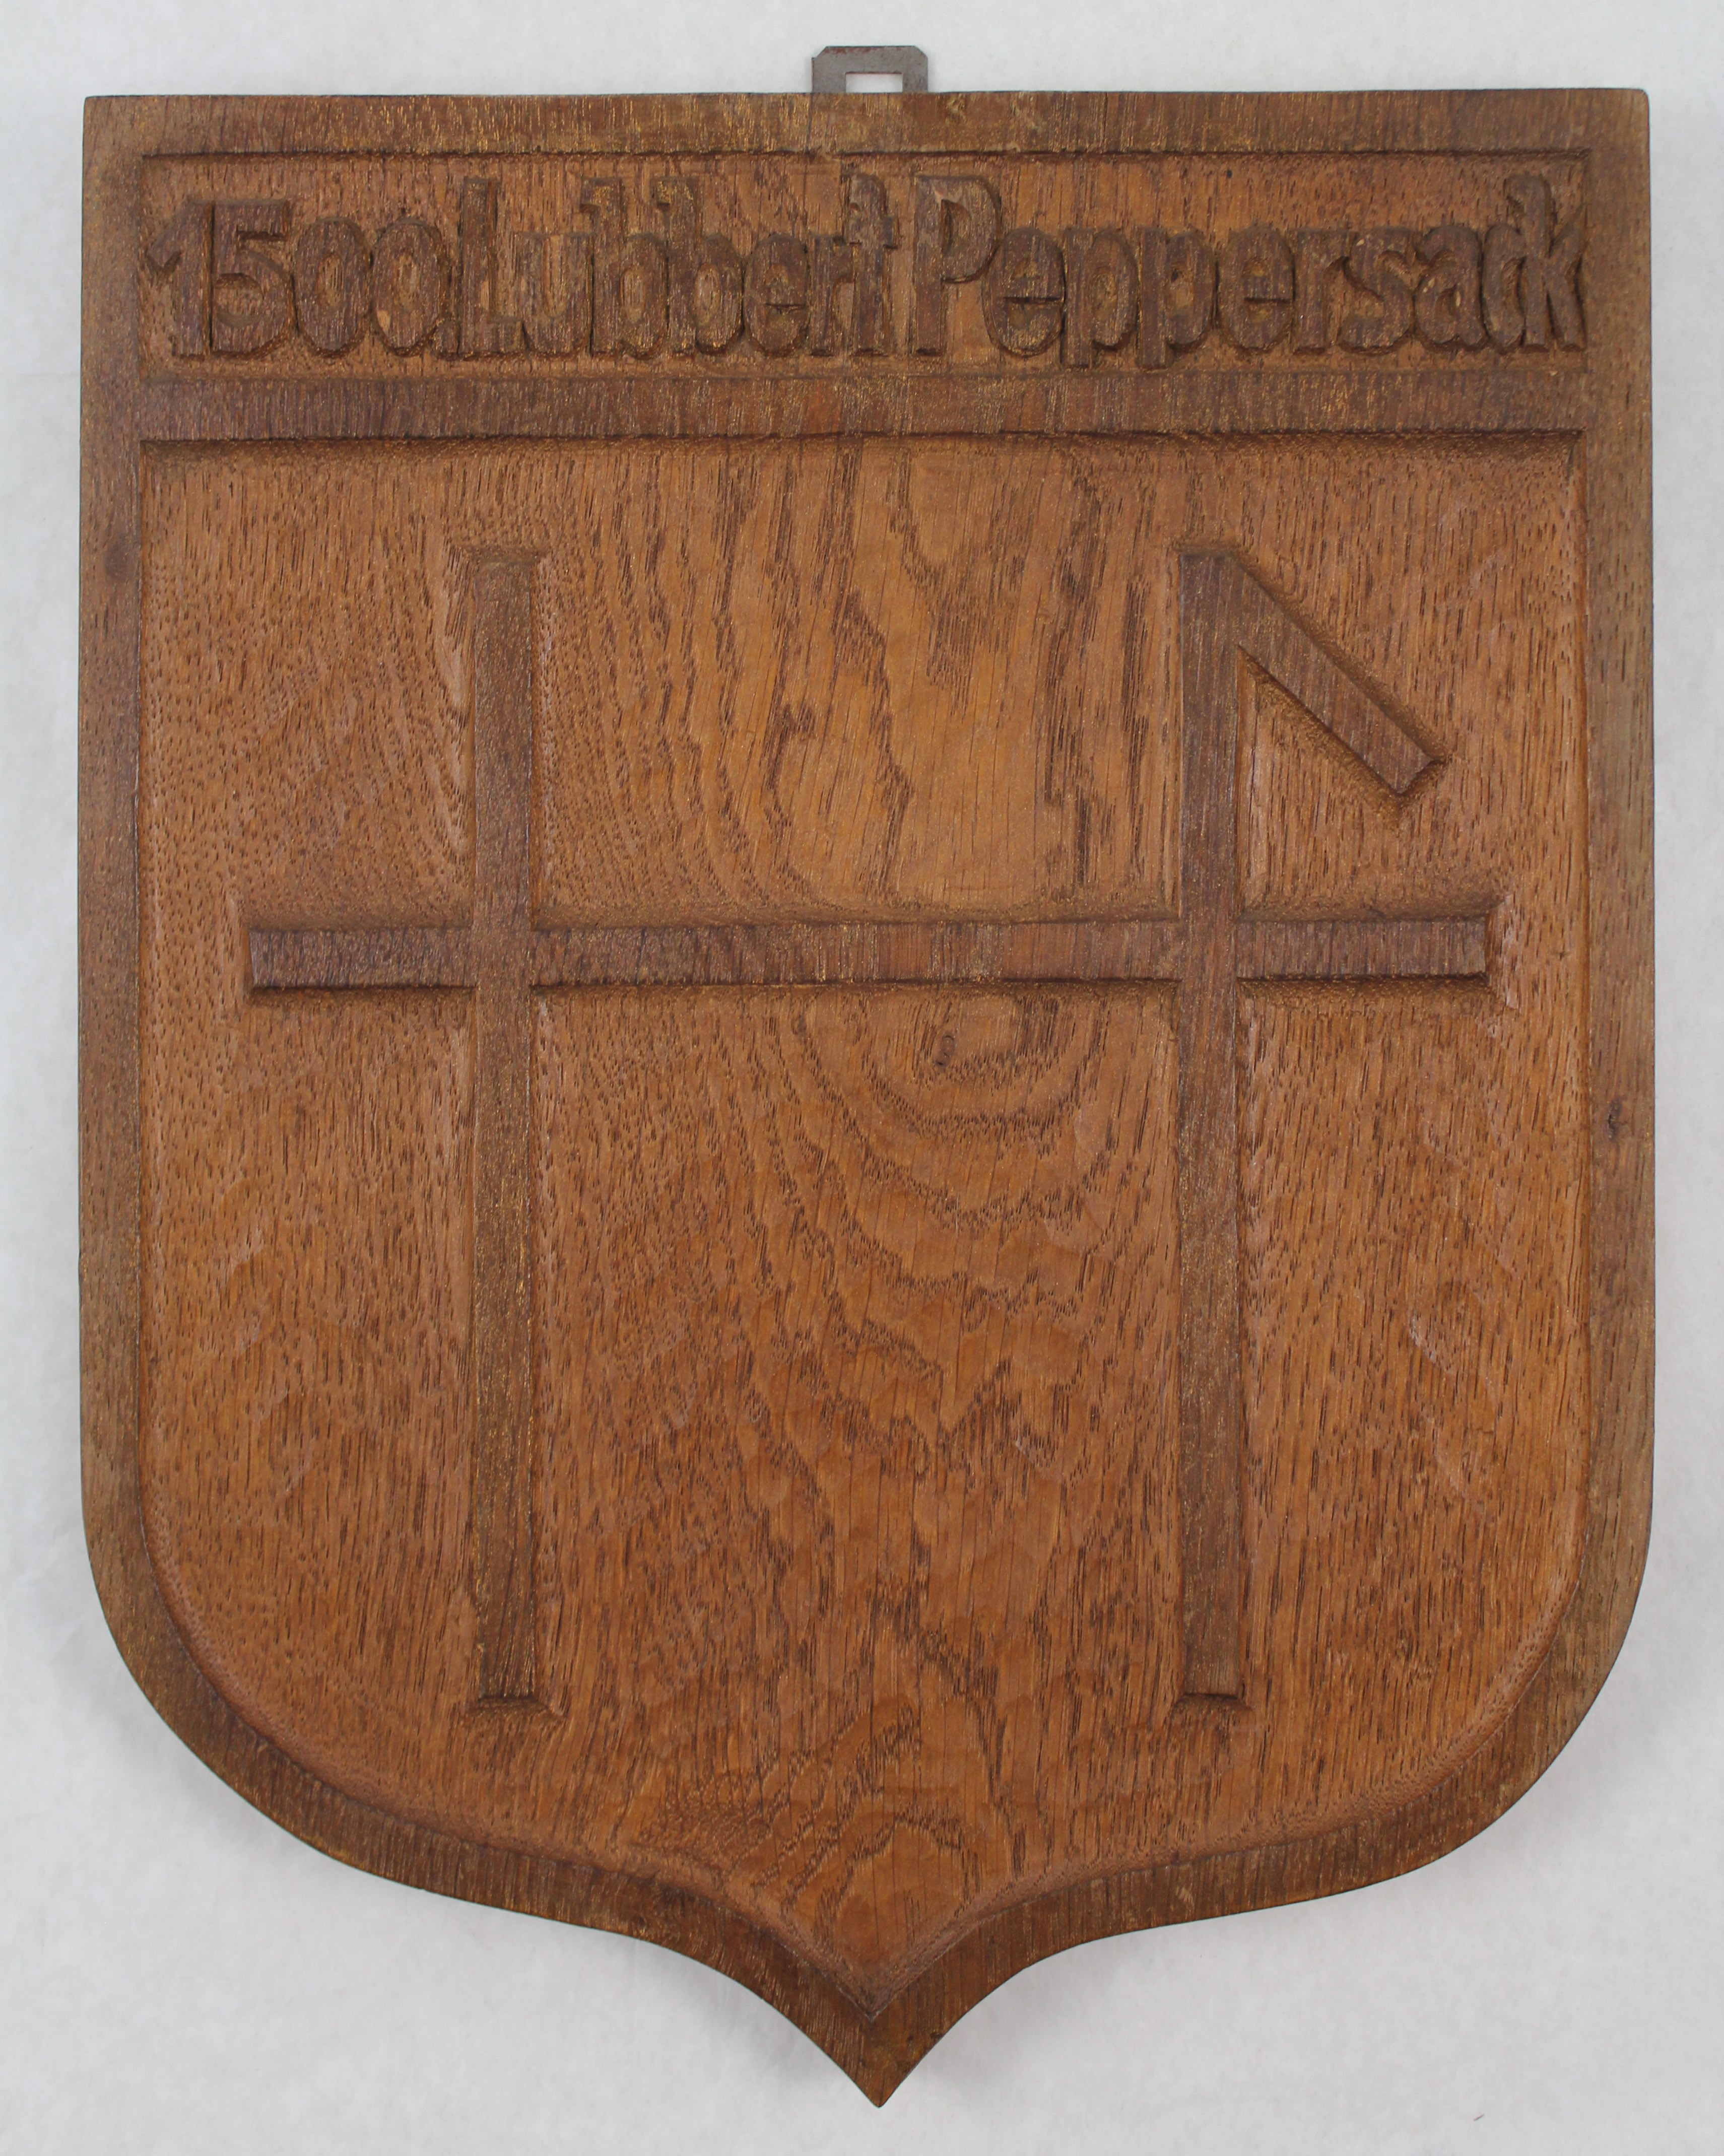 Wappenschild & Hölzernes Wappen mit Hausmarke, Lubbert Peppersack 1500 (Hellweg-Museum Unna CC BY-NC-SA)